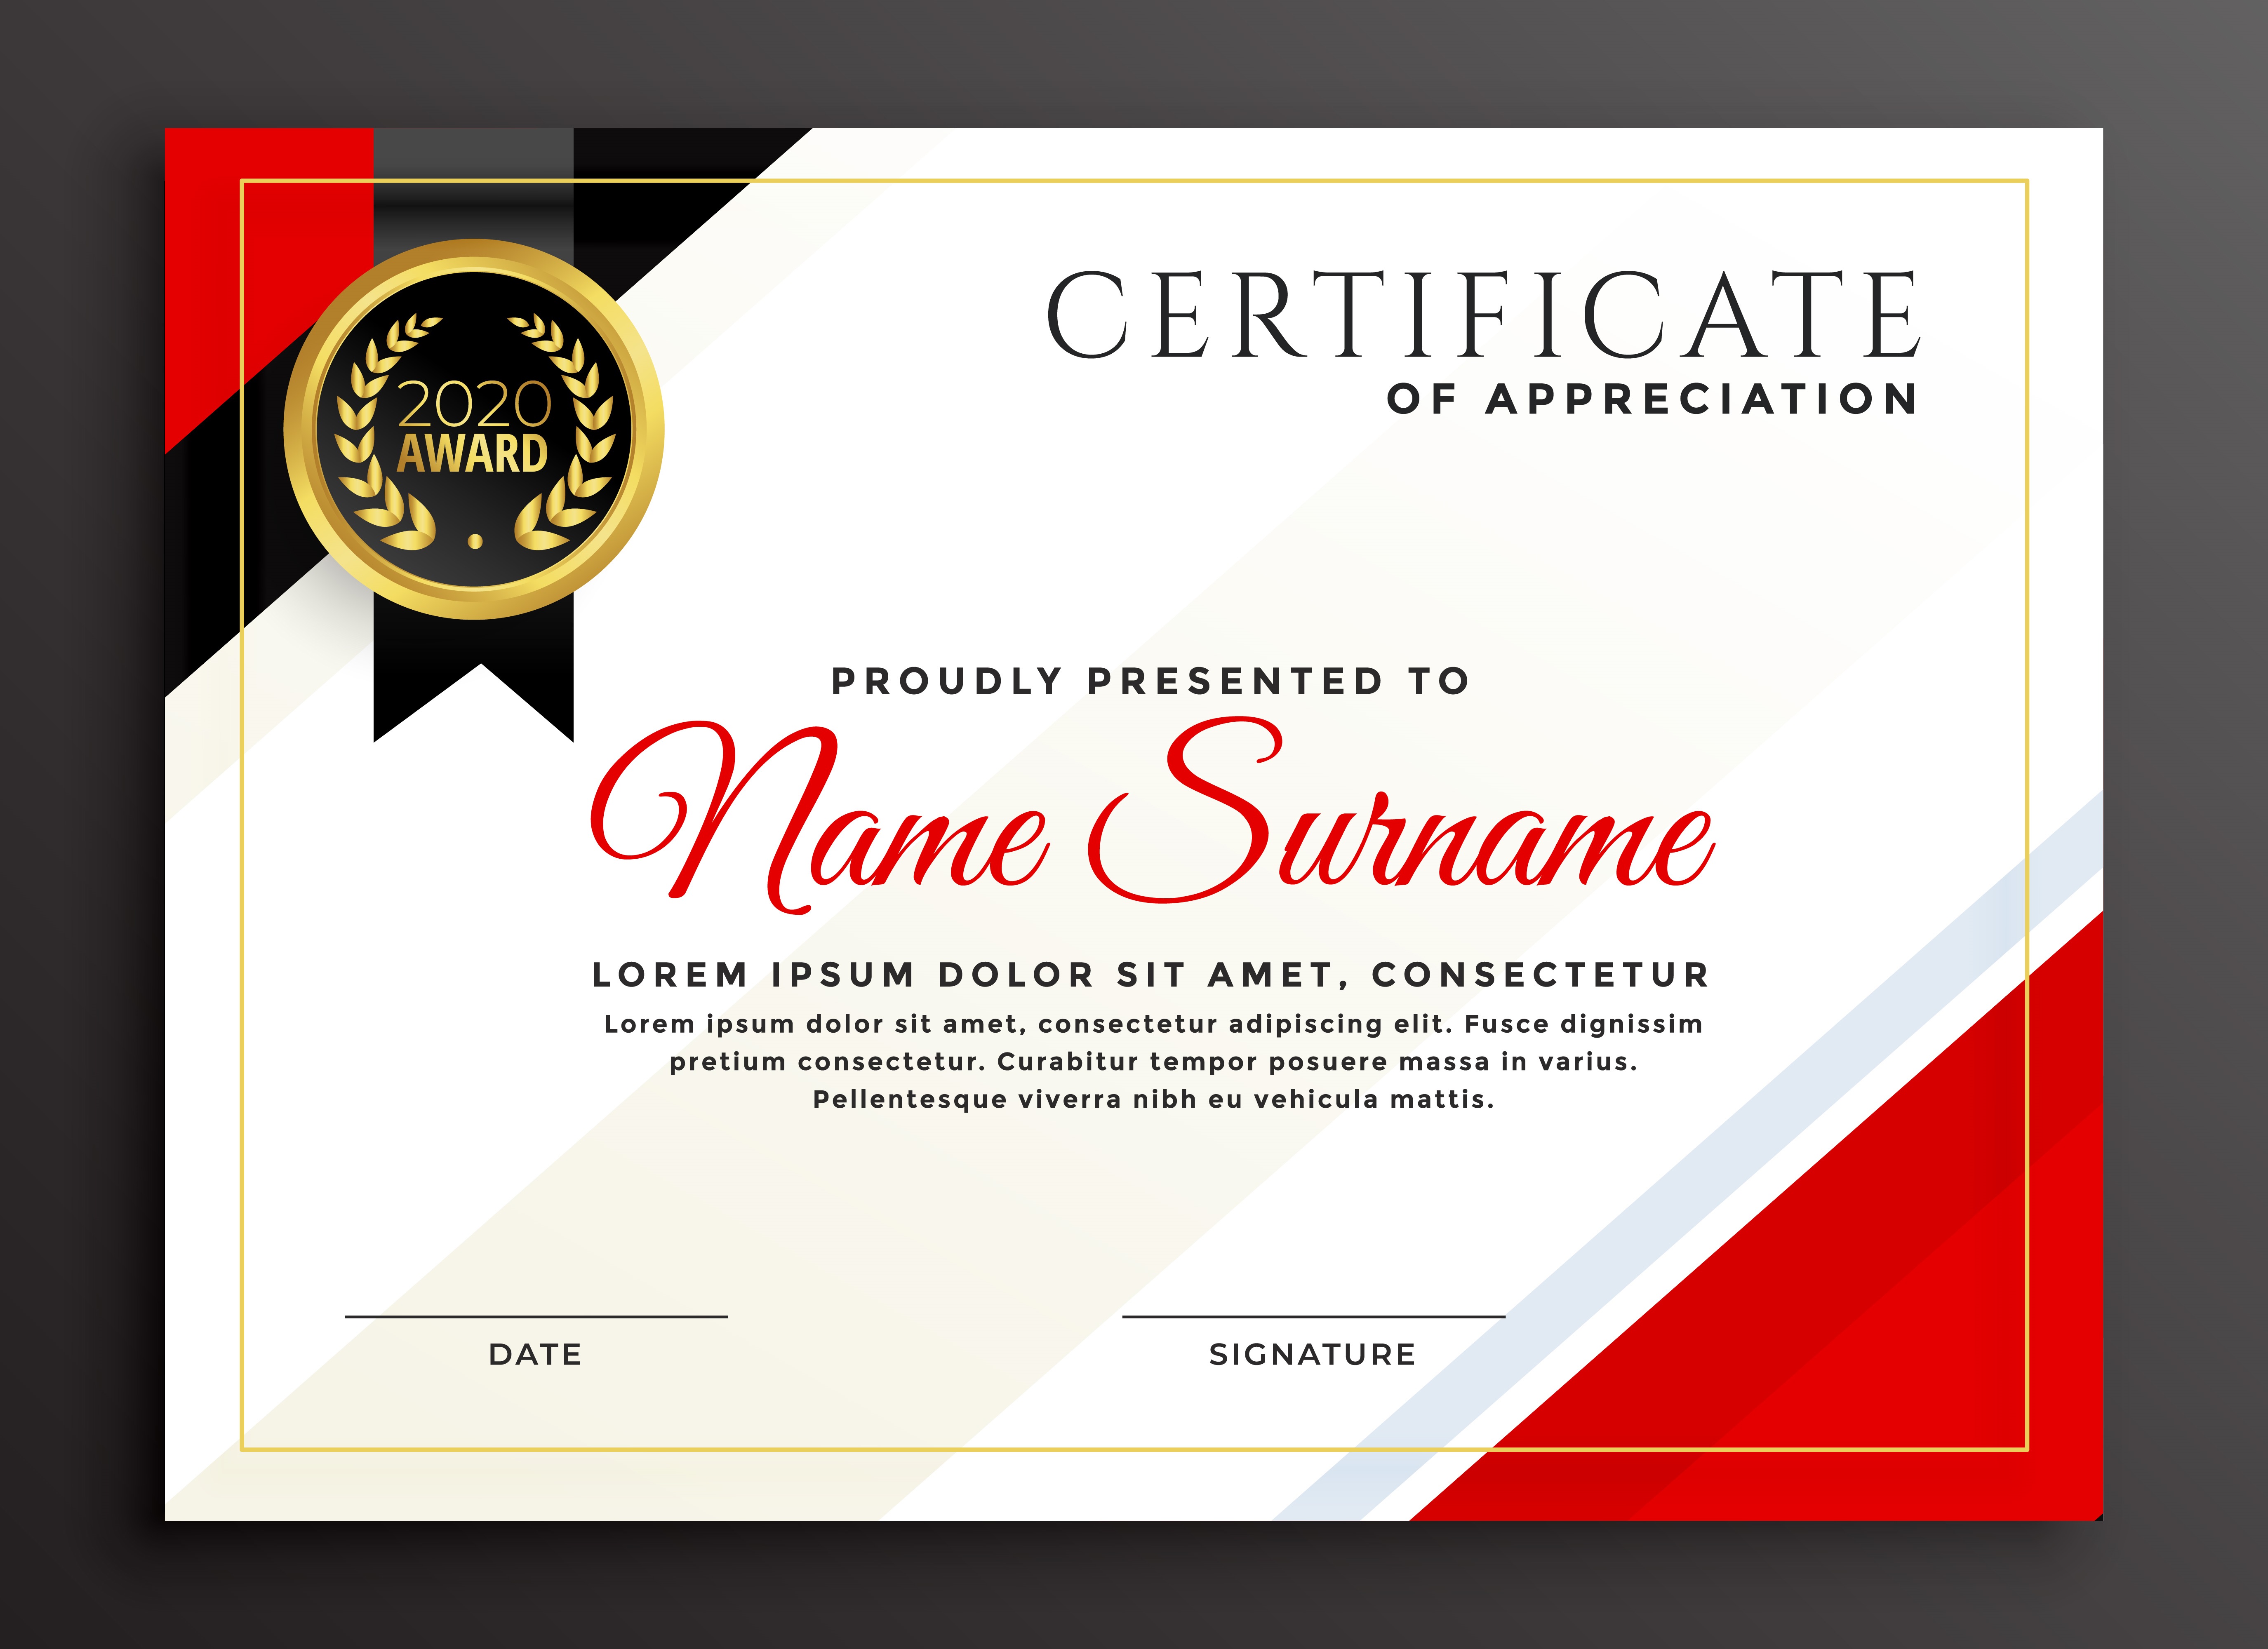 i-will-design-professional-award-certificate-certificate-appreciation-diploma-certificate-for